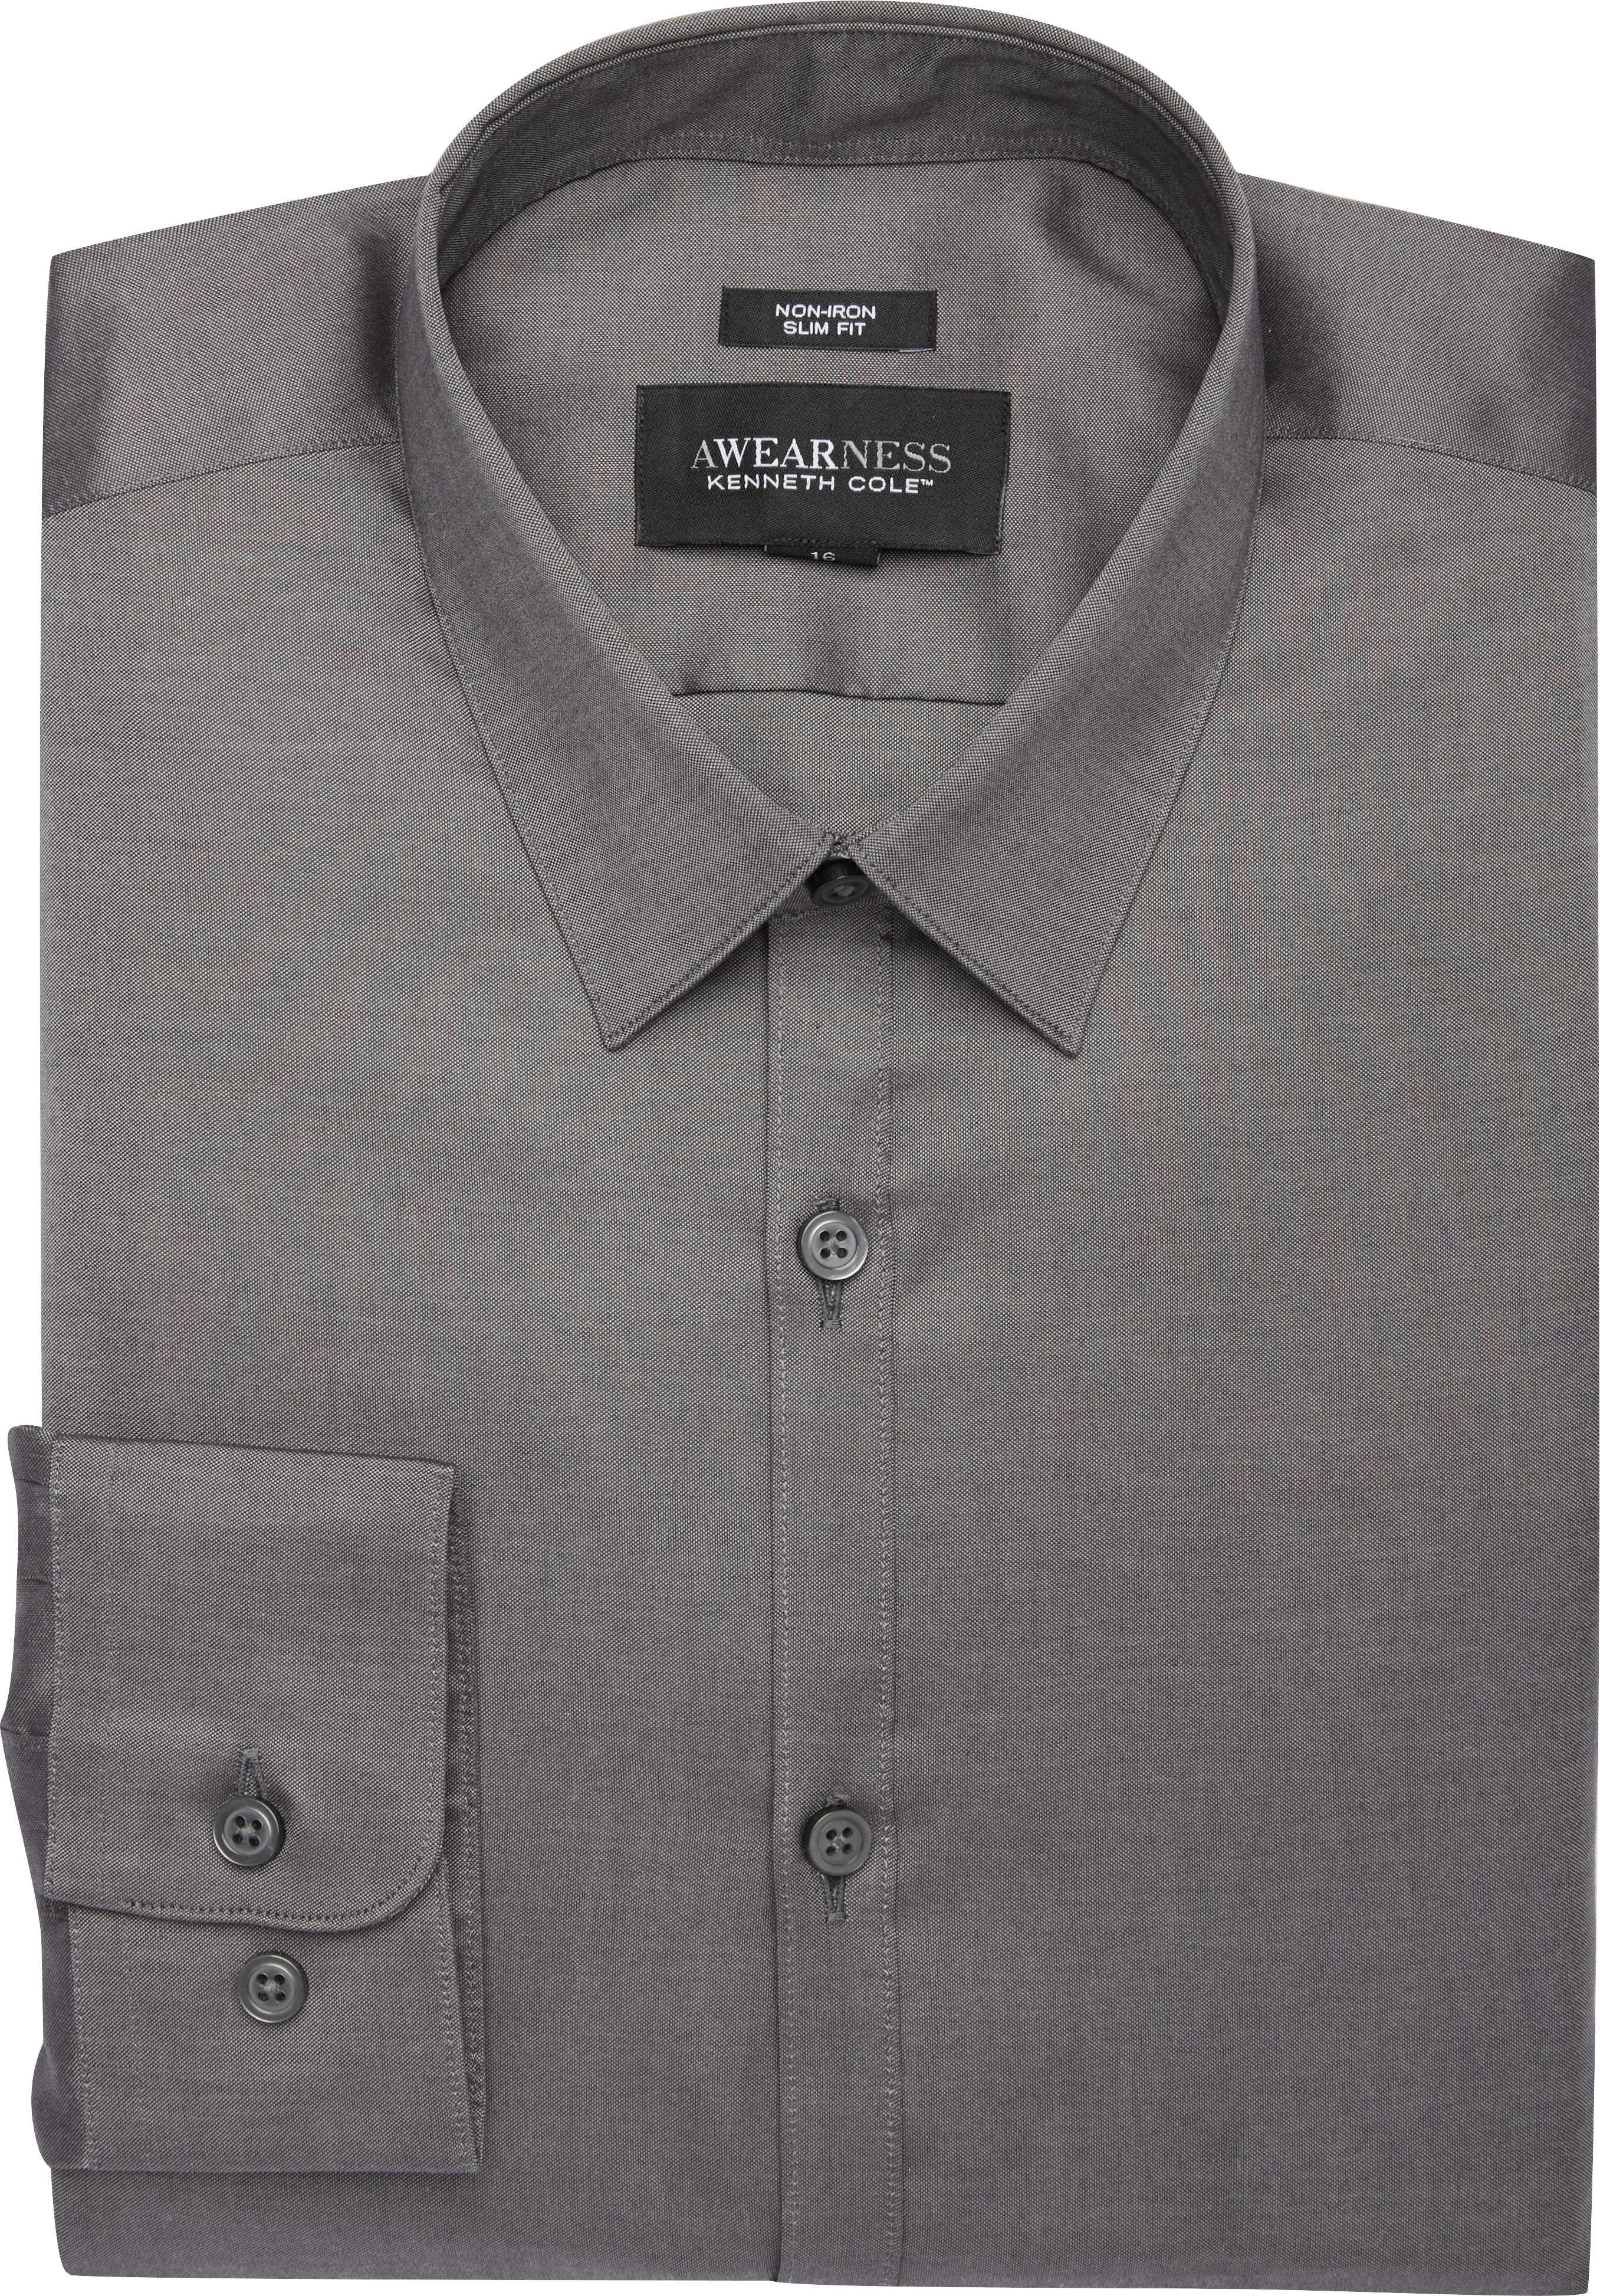 Awearness Kenneth Cole Charcoal Slim Fit Dress Shirt - Men's Sale | Men ...